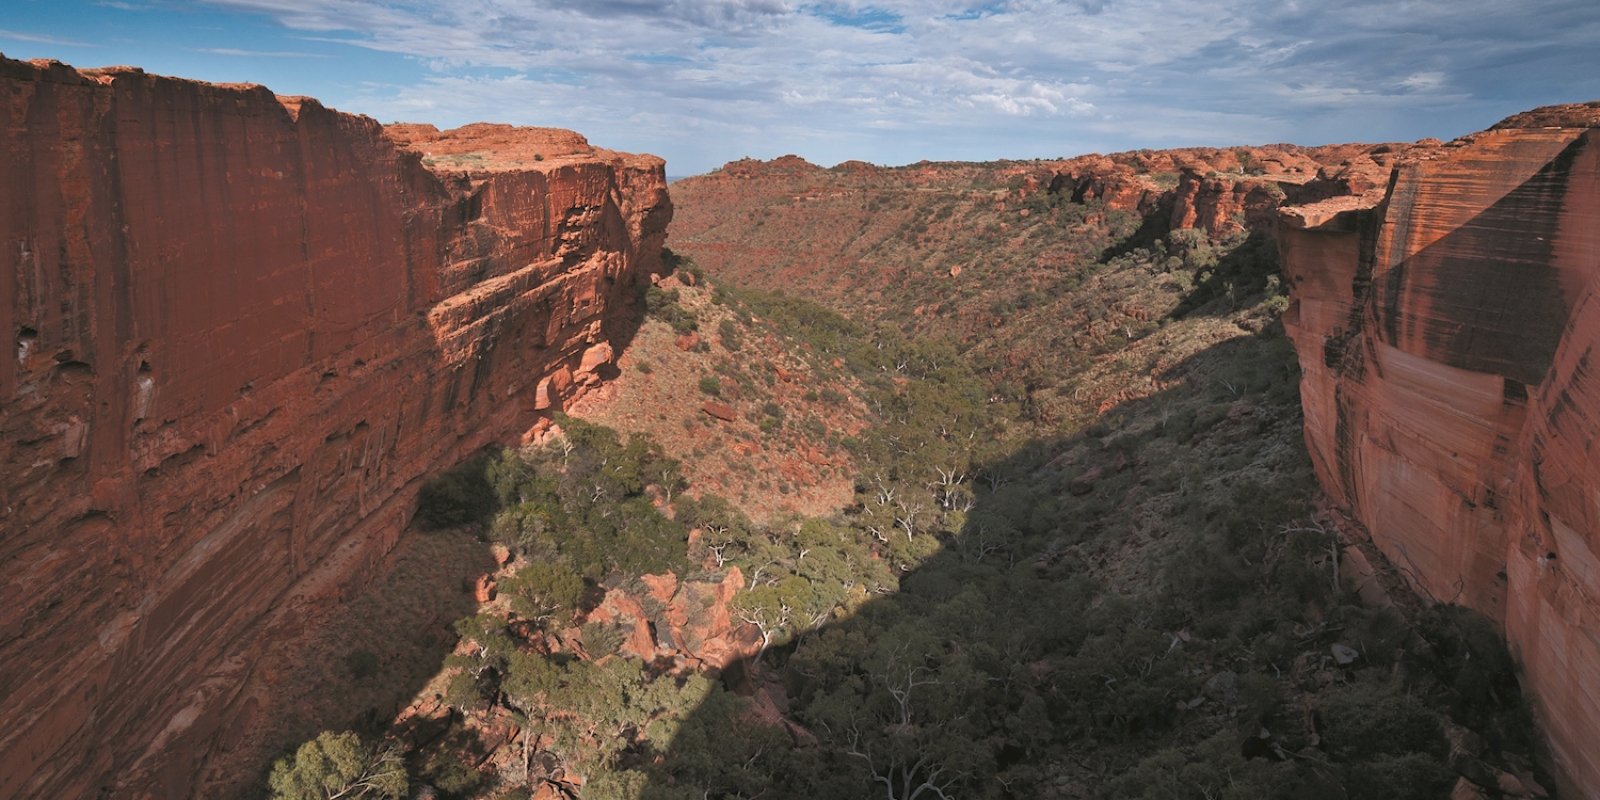 Australia Tours – Australien – Campingsafari Uluru und Kings Canyon – 36658-17c35a55-9acf-4594-8c36-ae9c3955ffe7-fullsize (1)